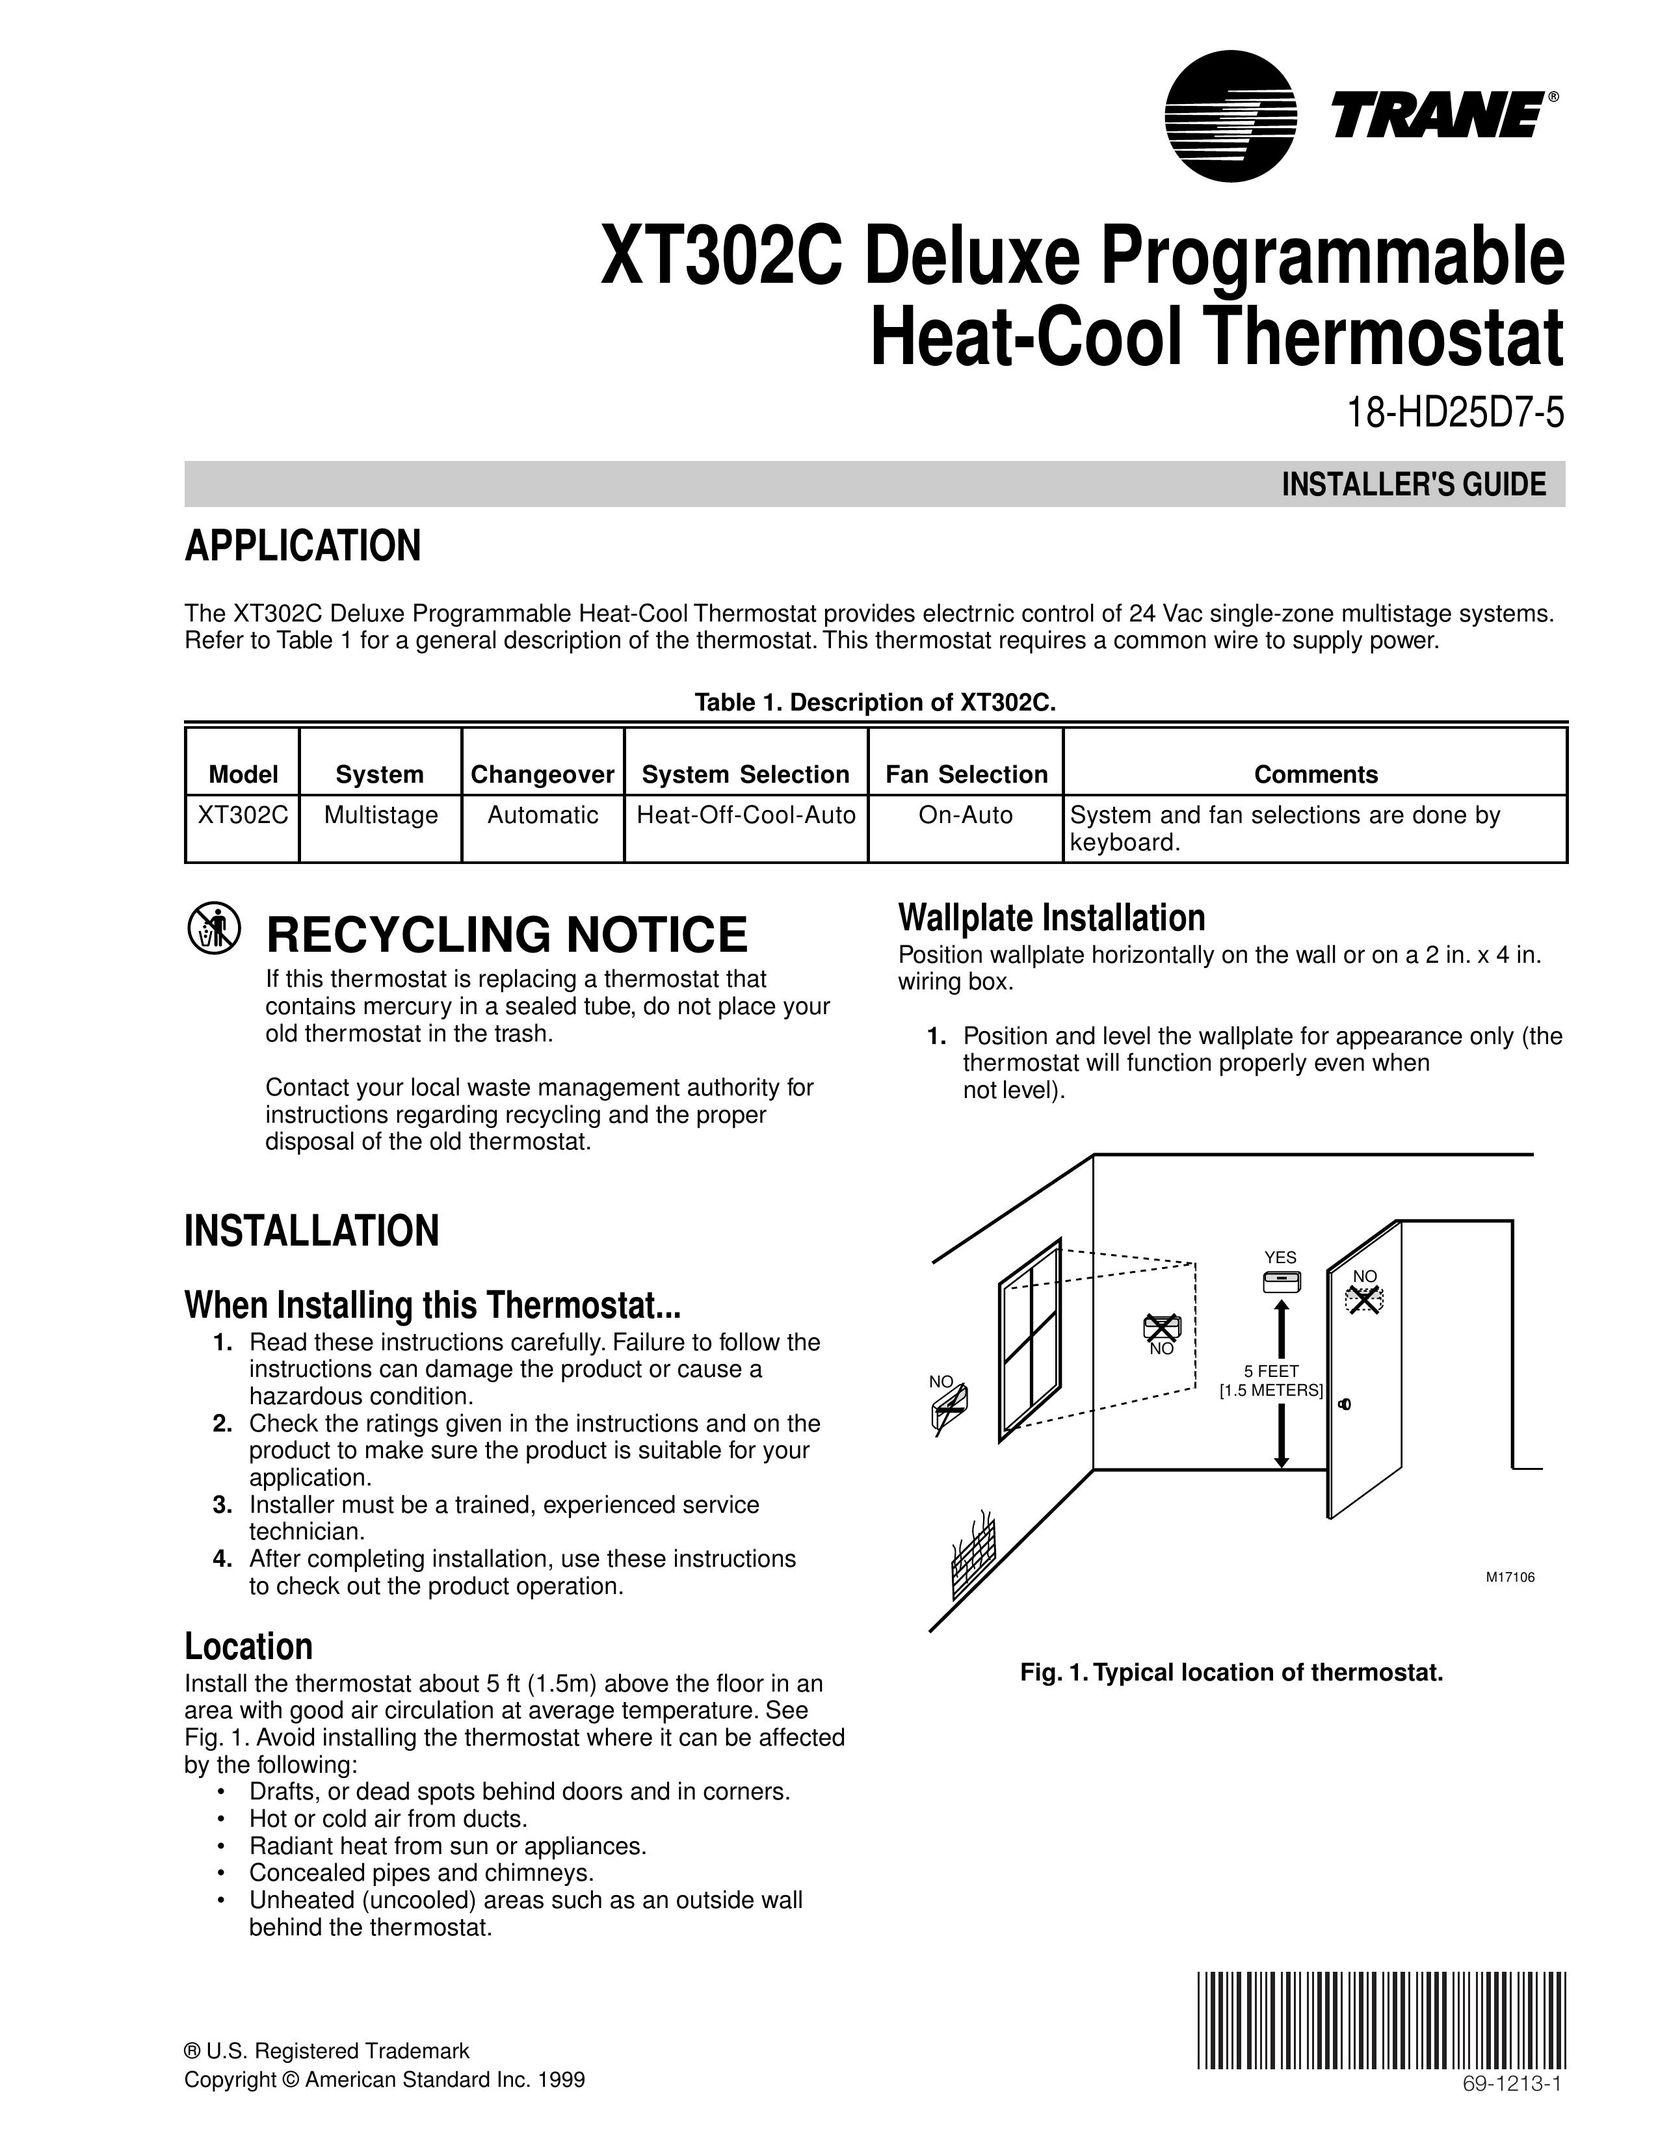 Trane XT302C Thermostat User Manual